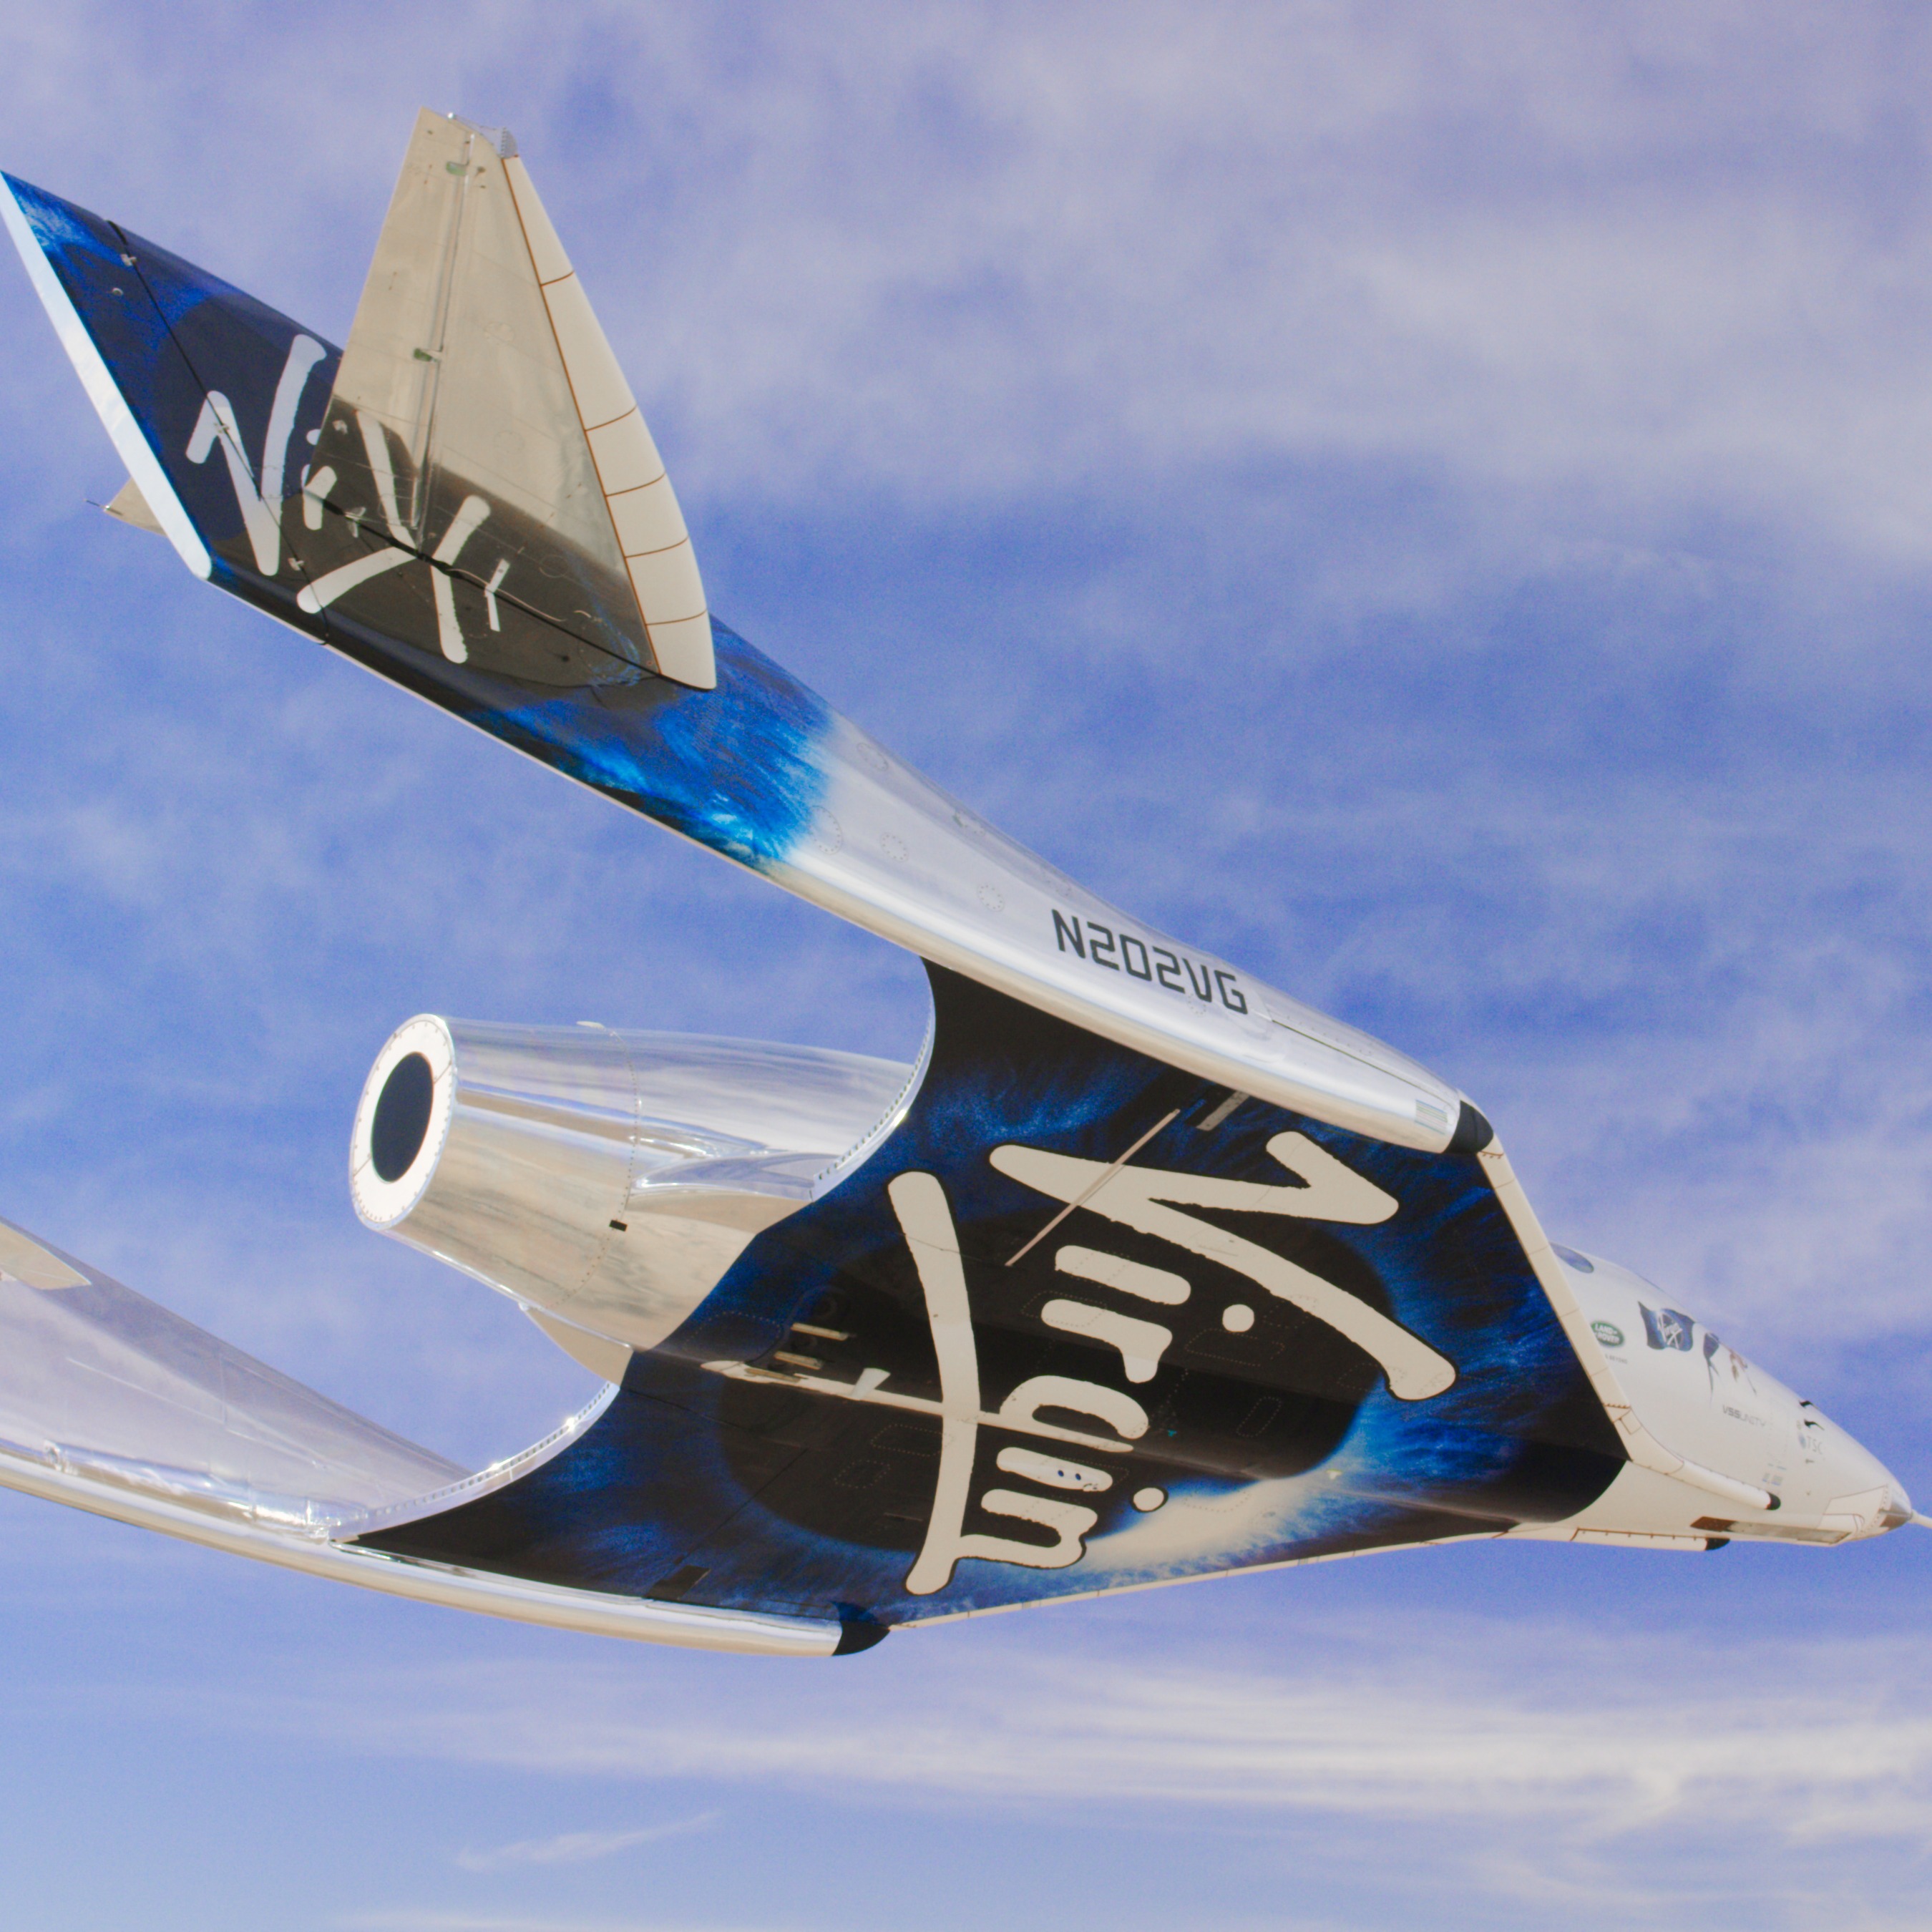 Virgin Galatic's SpaceshipTwo glides through the sky